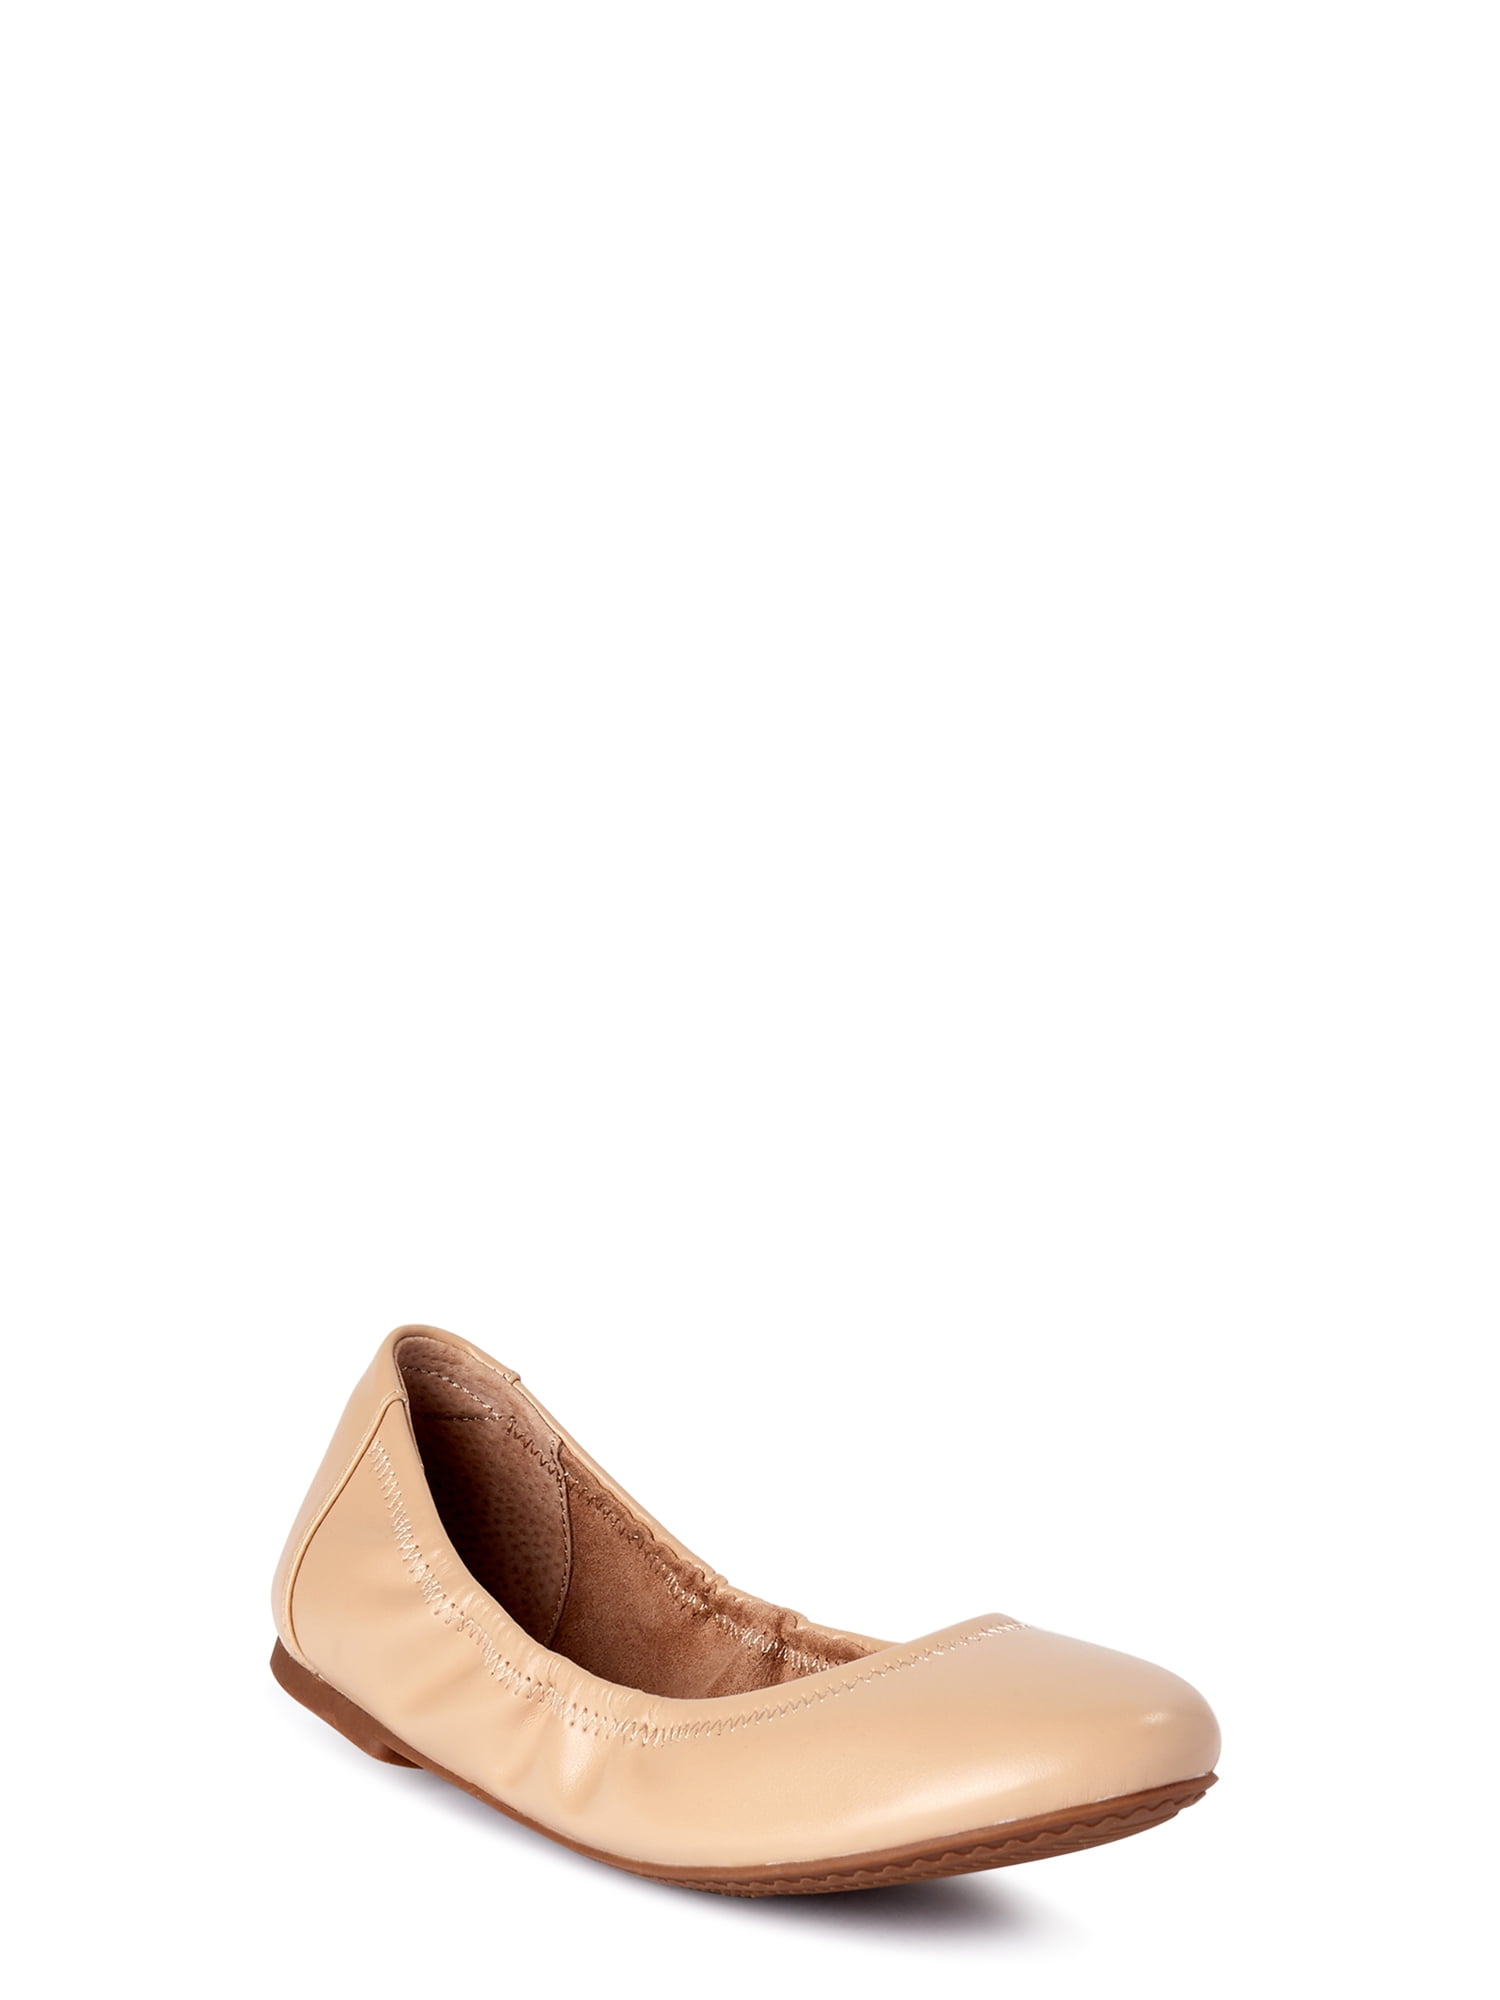 Girls Candy Color Comfort Slip On Ballet Dressy Flats Shoes for Women 